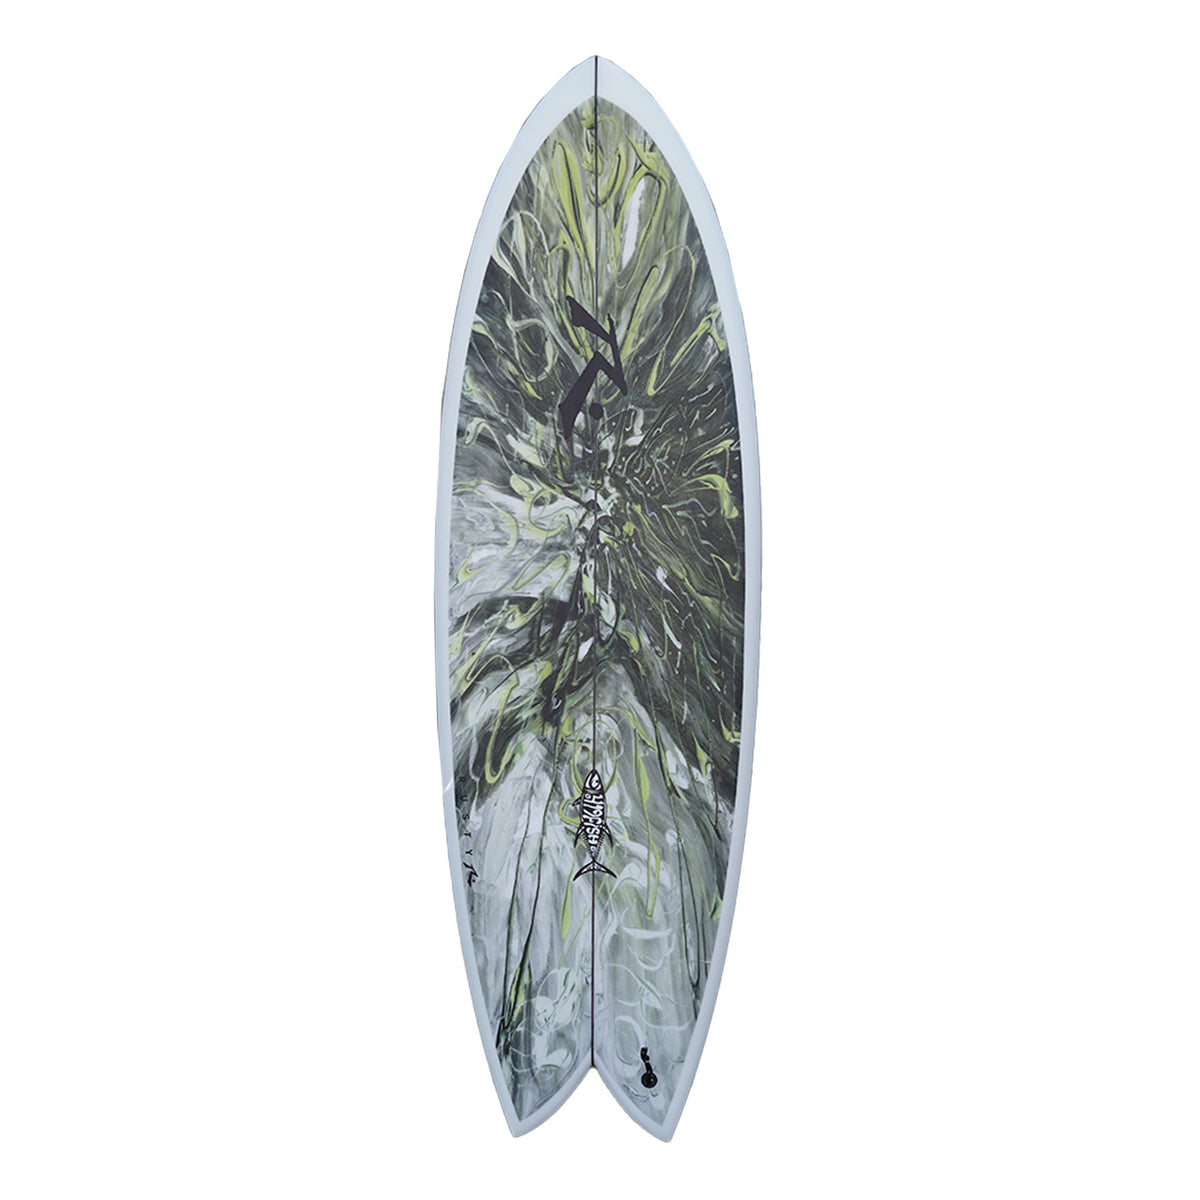 419fish - Alternative - Rusty Surfboards - Top View - Grey Swirl